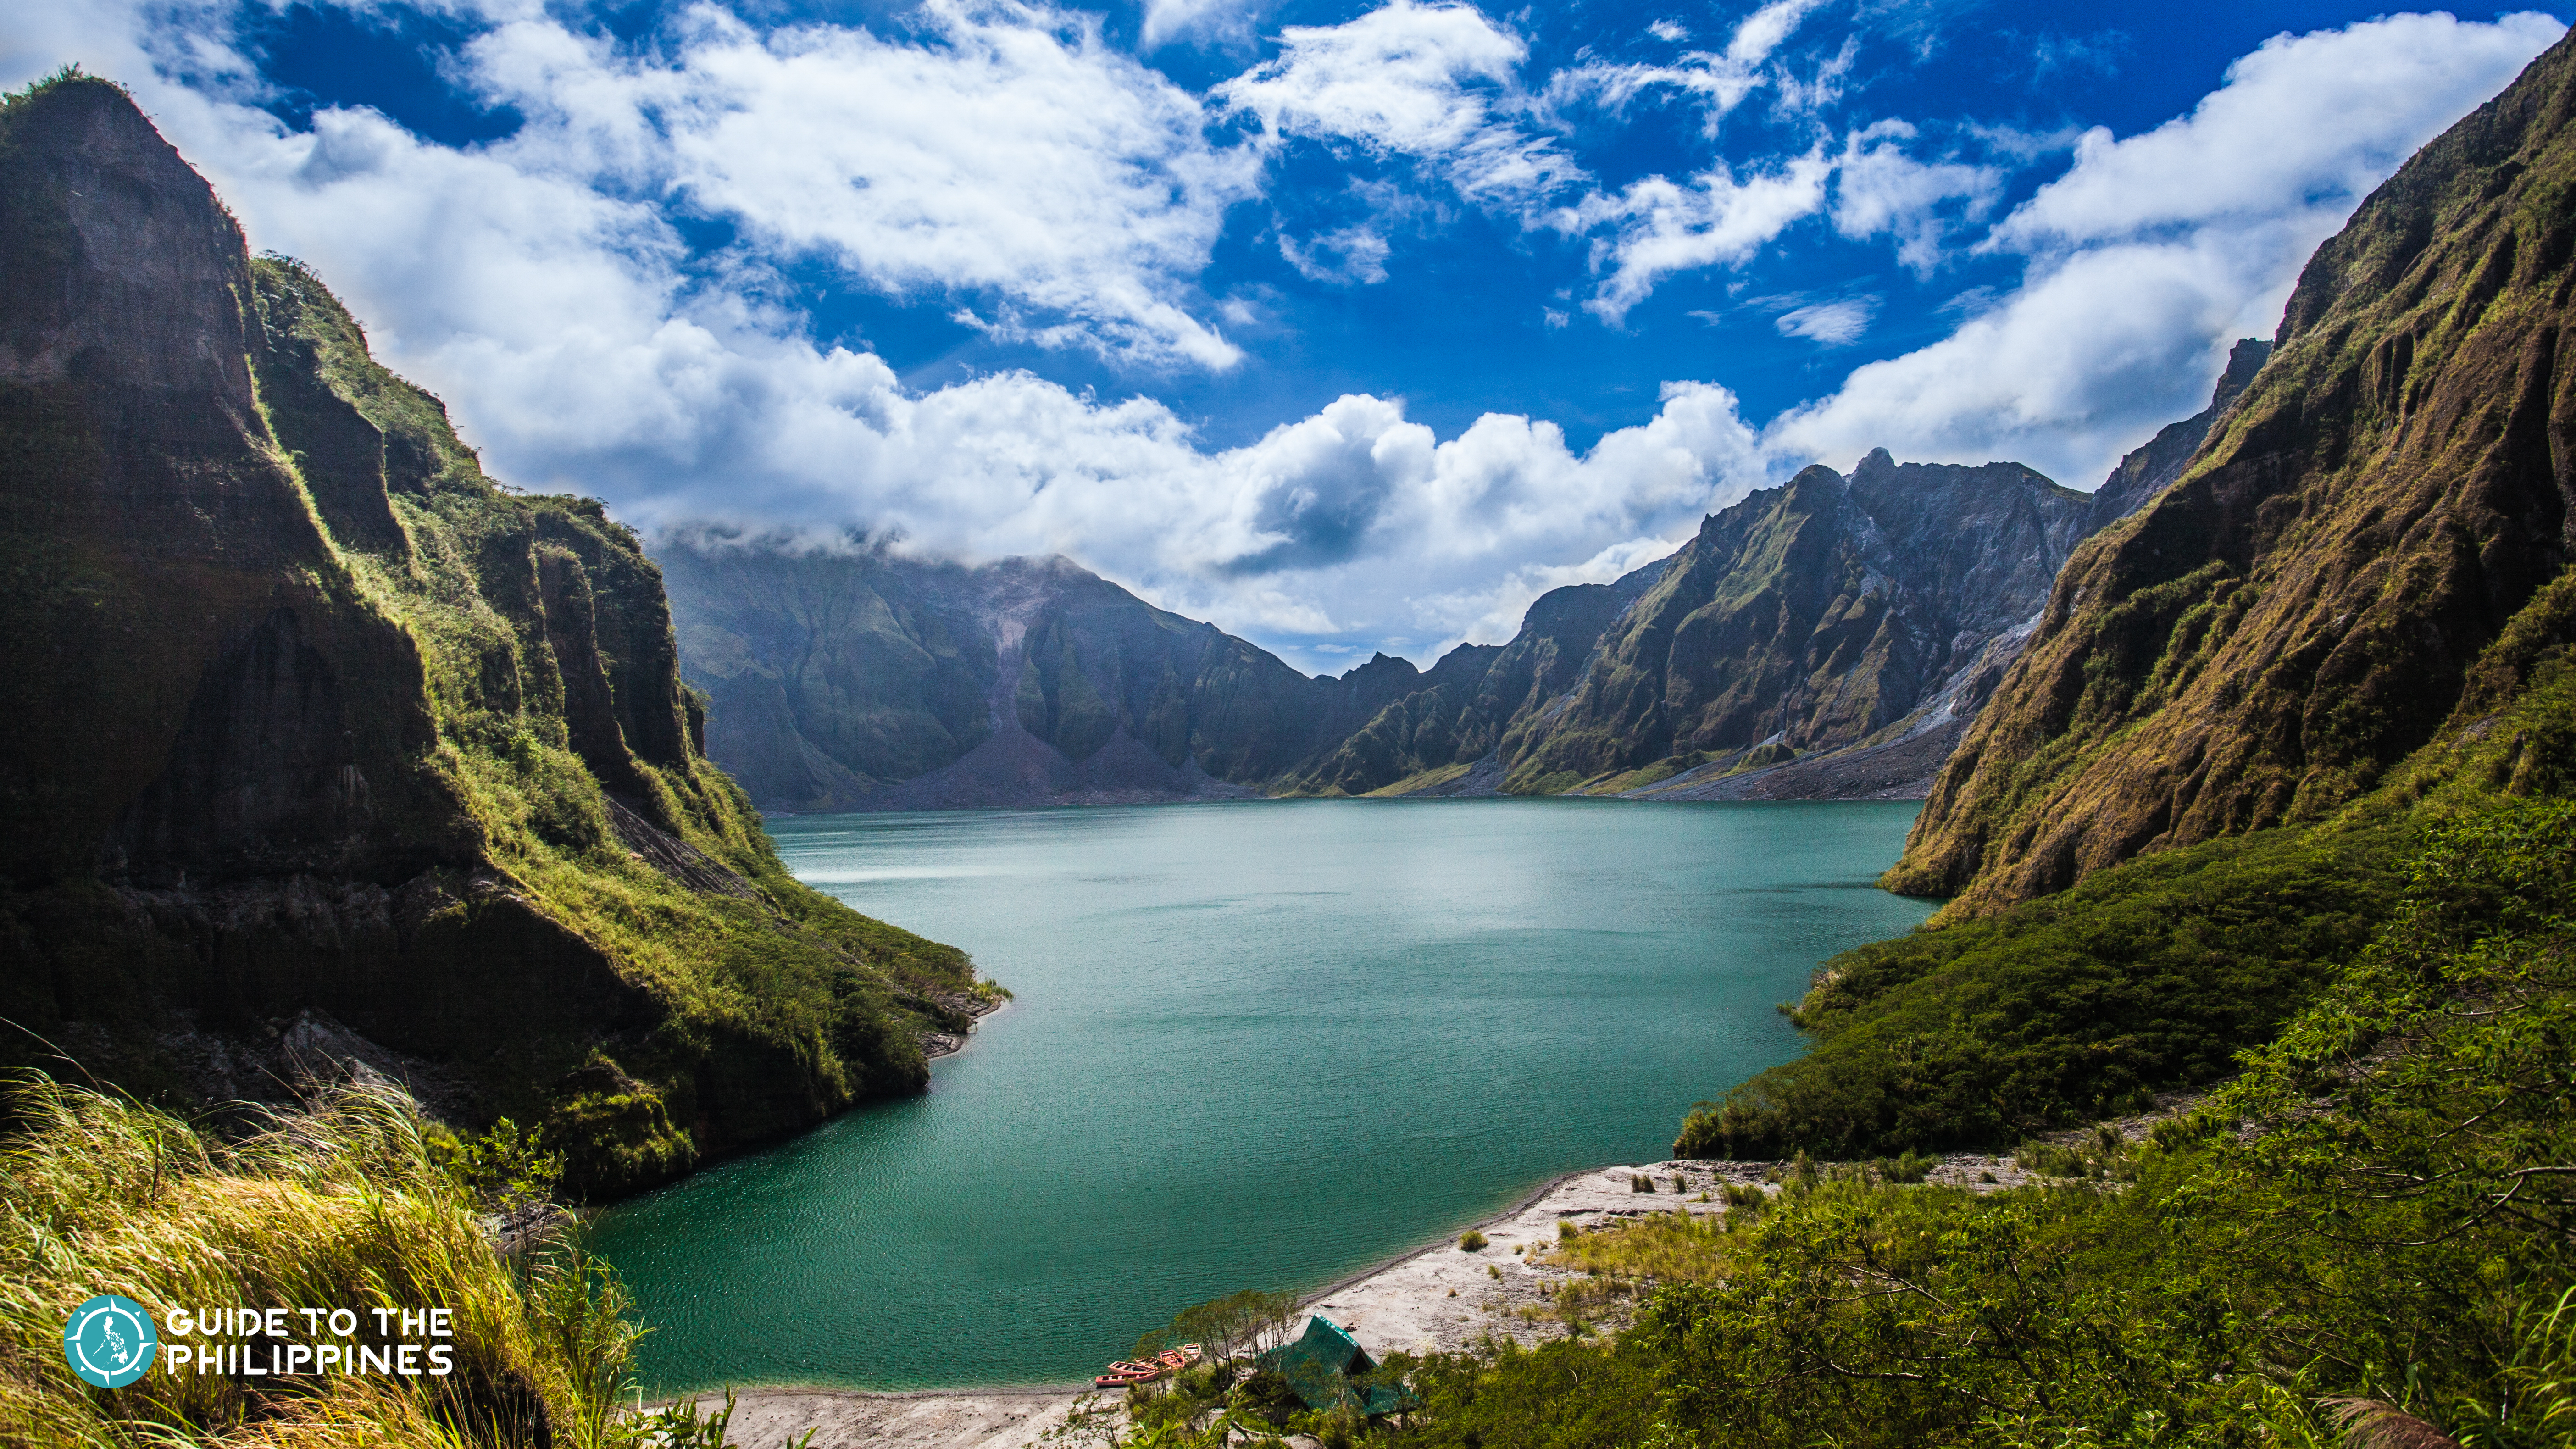 Beautiful scenery of Mt. Pinatubo Crater Lake